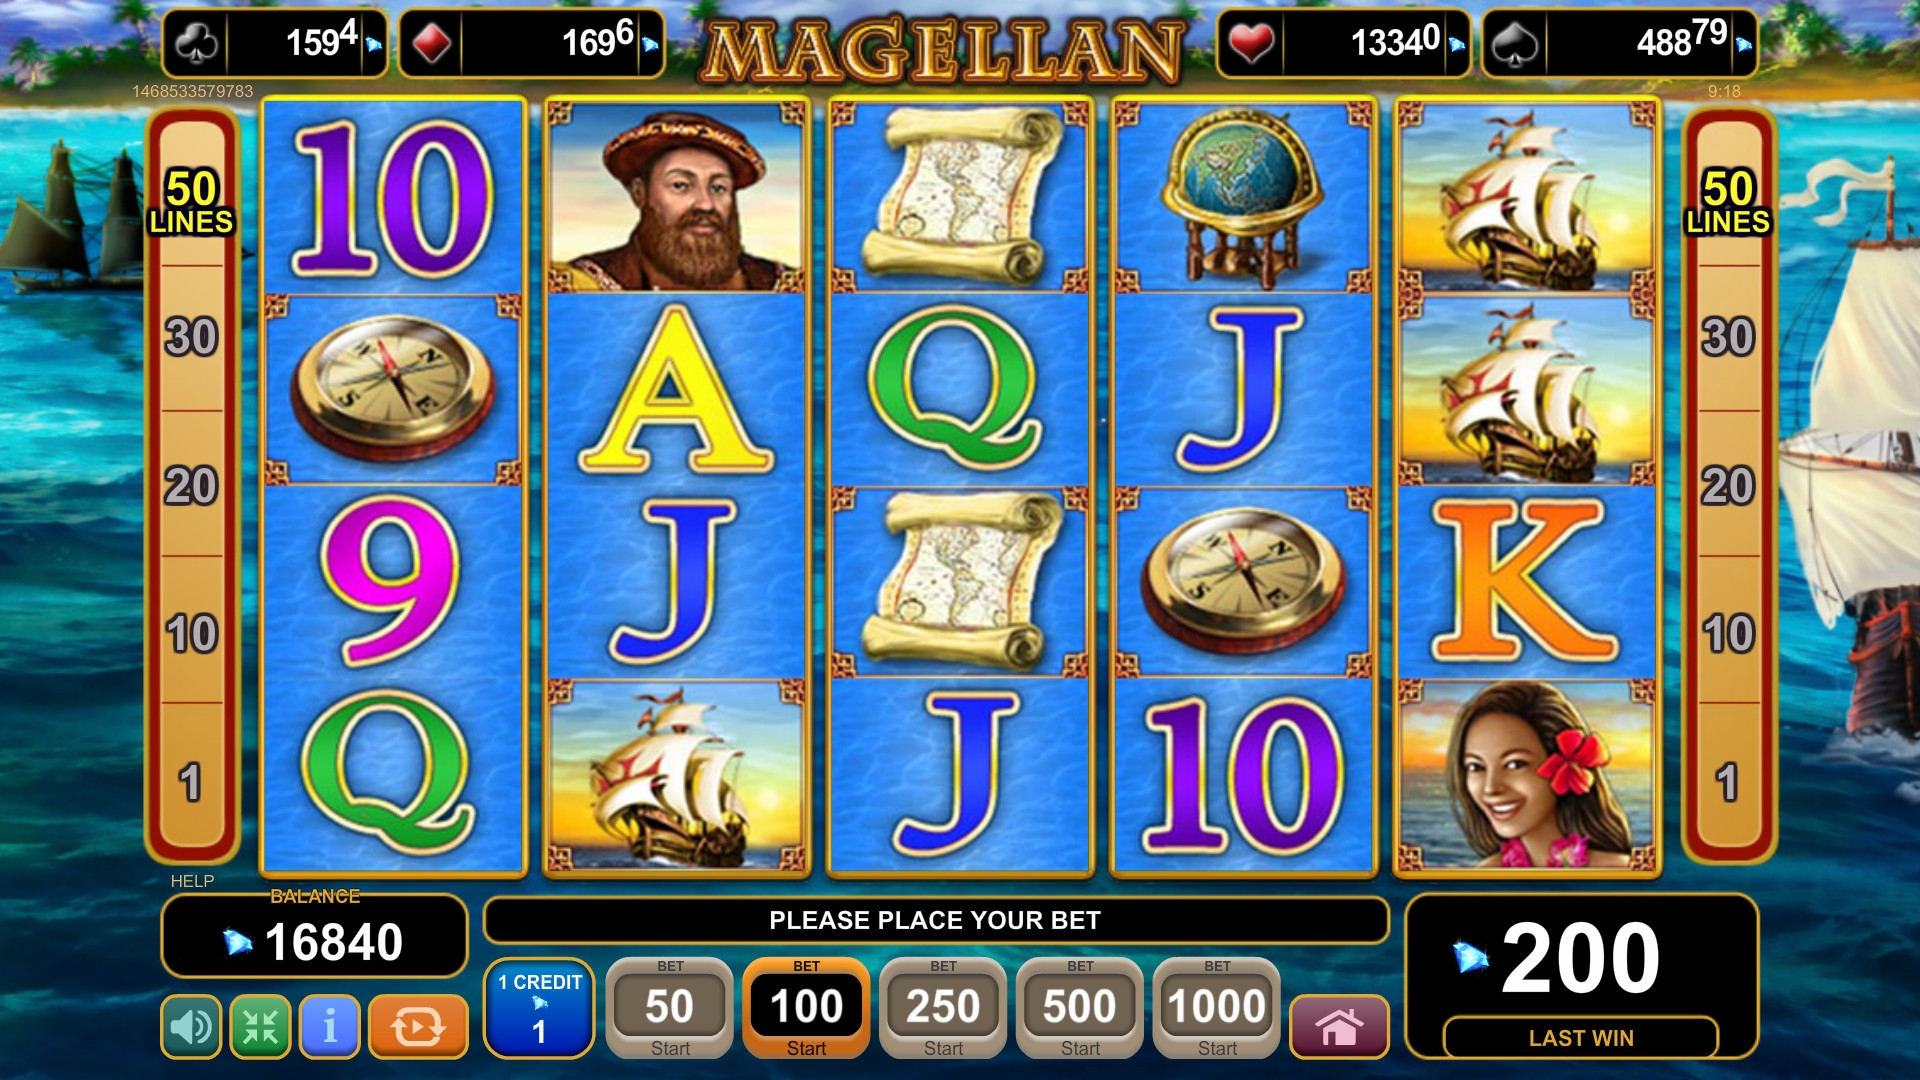 Magellan (Magellan) from category Slots